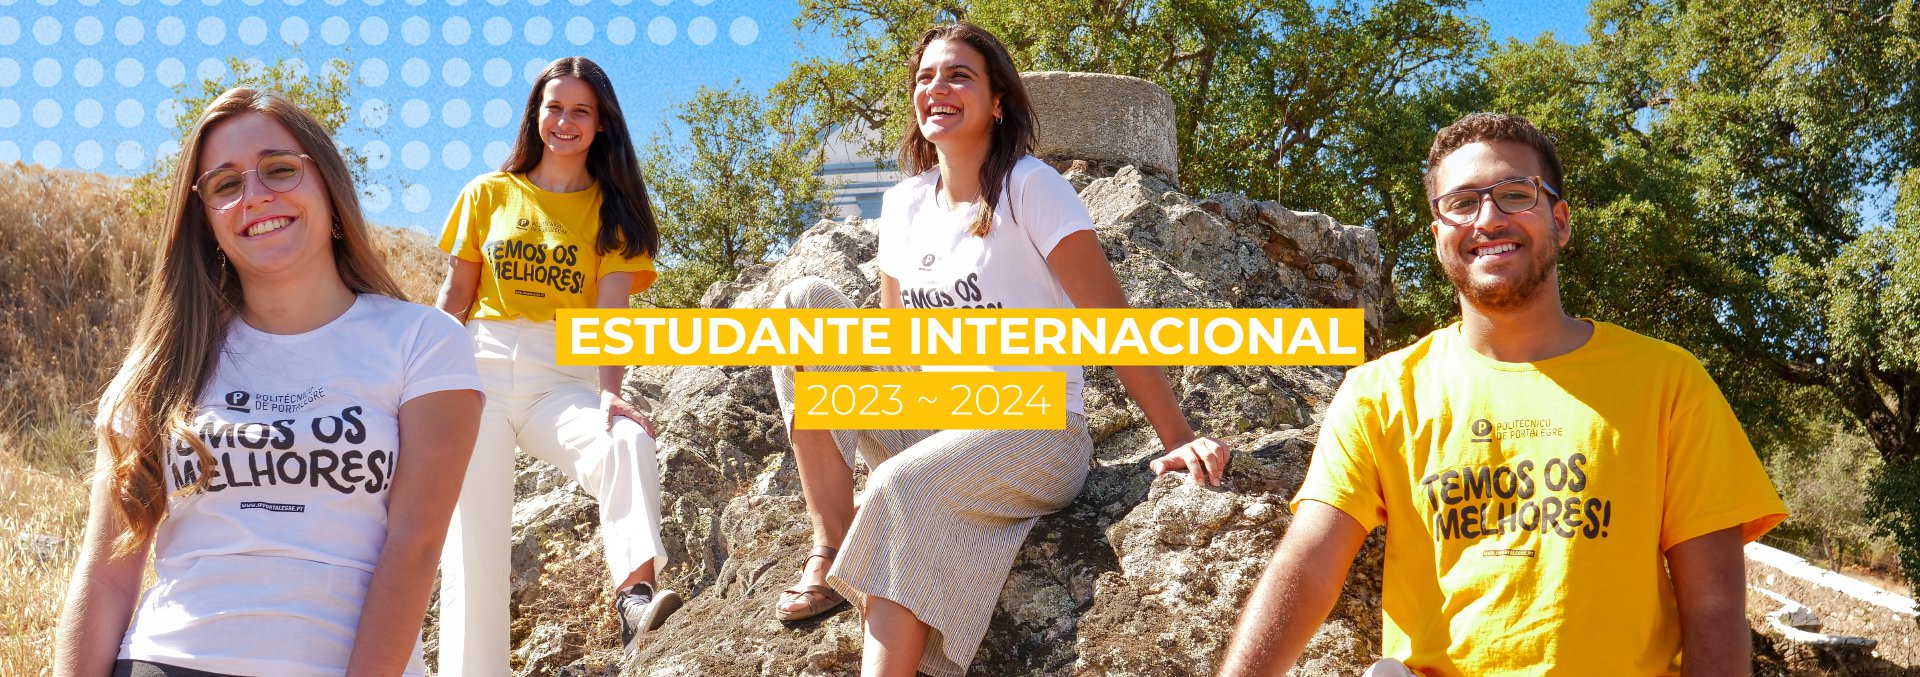 Concurso Especial para Estudantes Internacionais, CTeSP, Candidaturas abertas